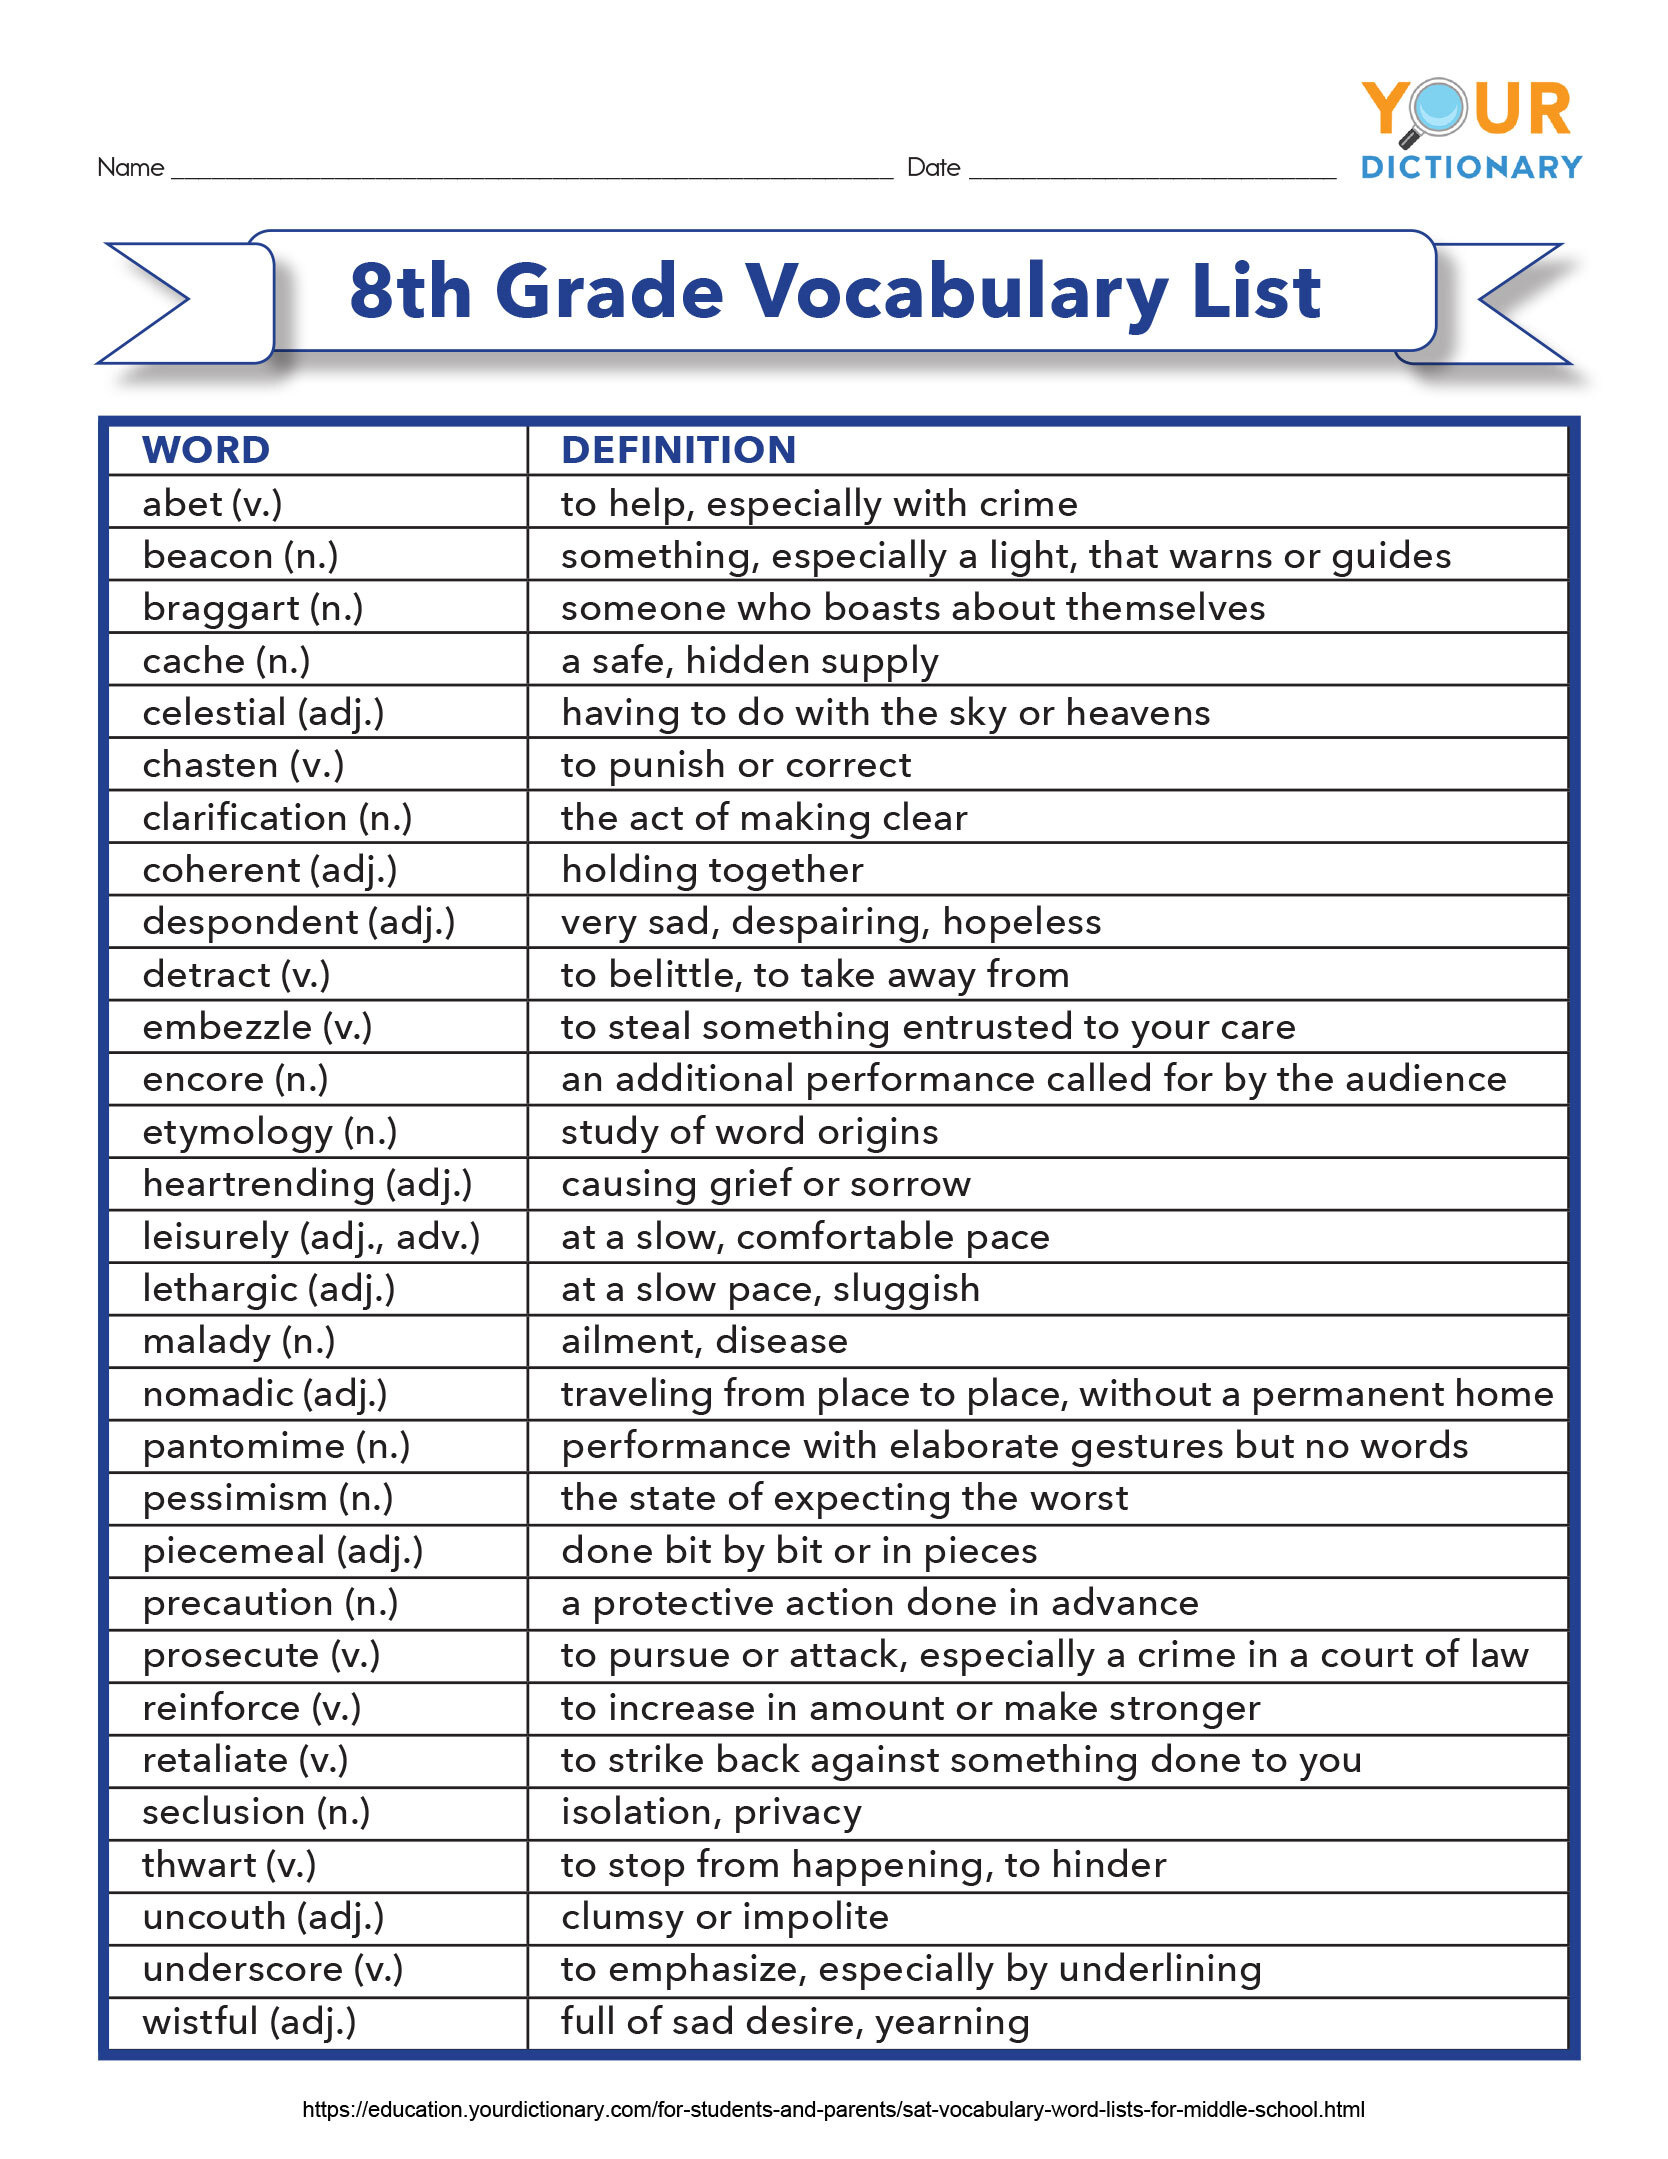 8th grade vocabulary list printable